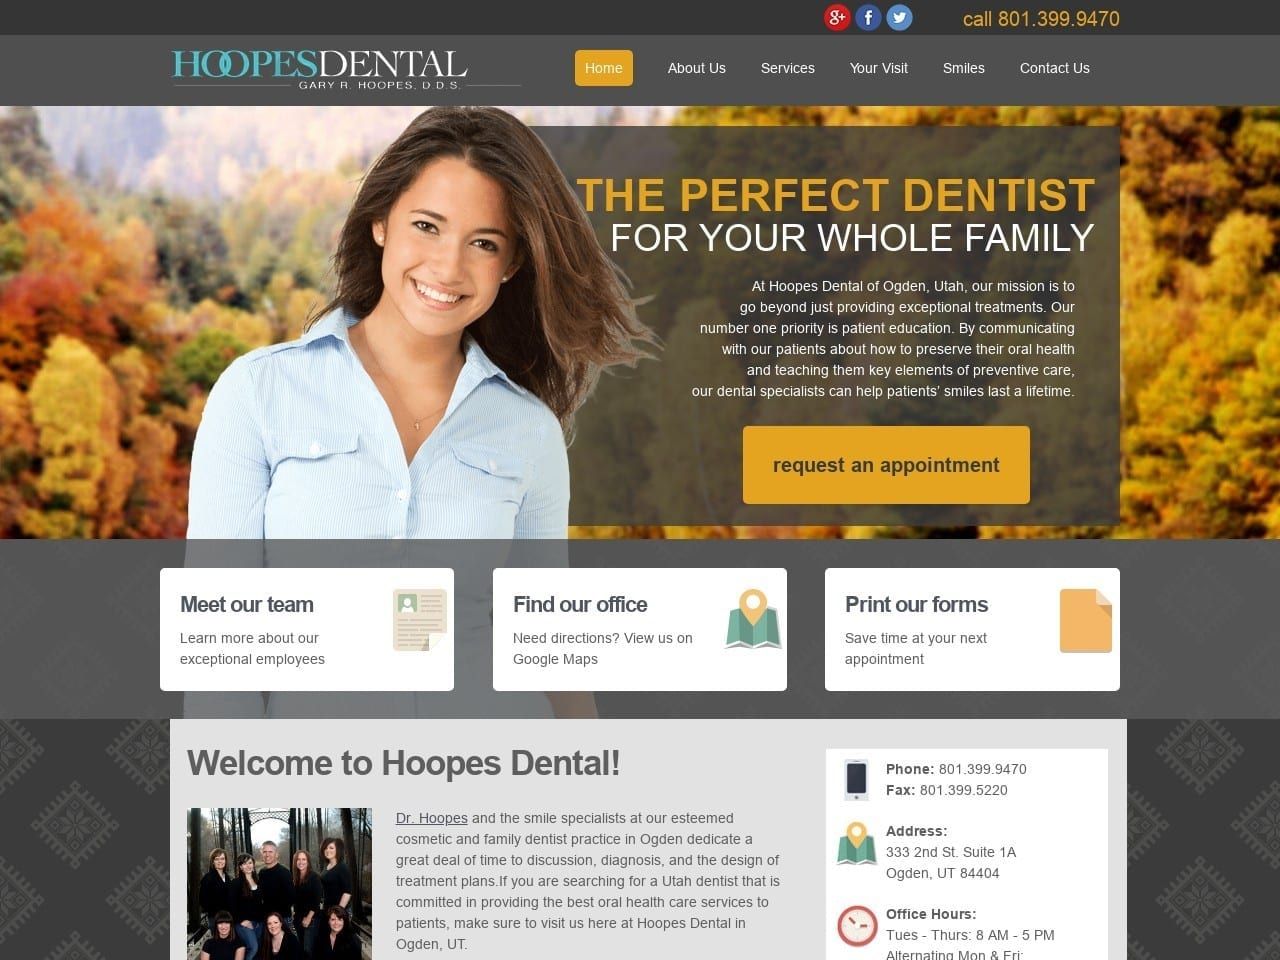 Hoopes Dental Website Screenshot from hoopesdental.com